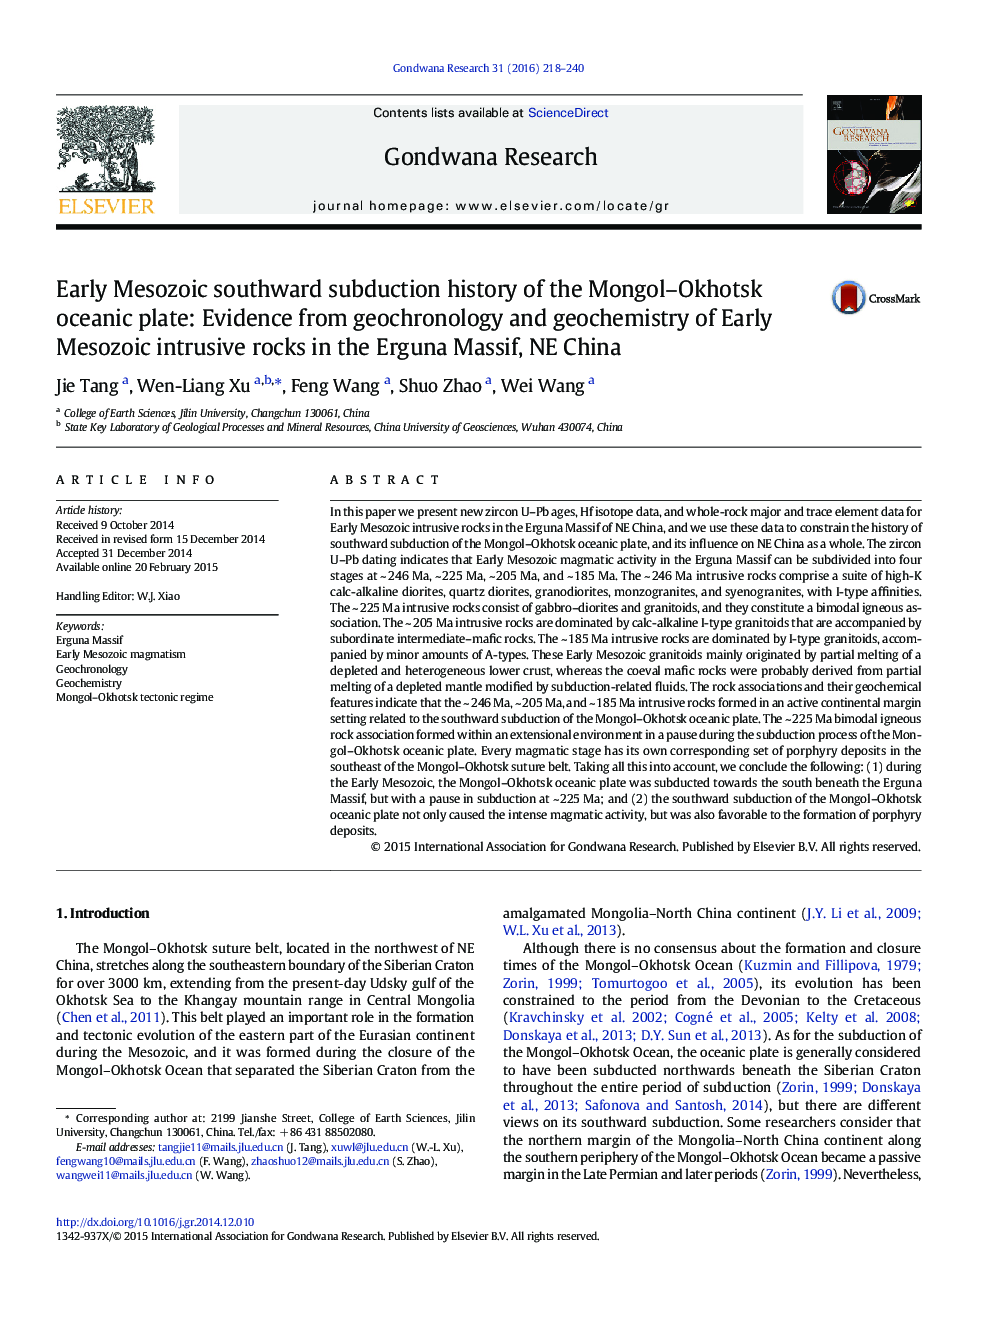 Early Mesozoic southward subduction history of the Mongol–Okhotsk oceanic plate: Evidence from geochronology and geochemistry of Early Mesozoic intrusive rocks in the Erguna Massif, NE China